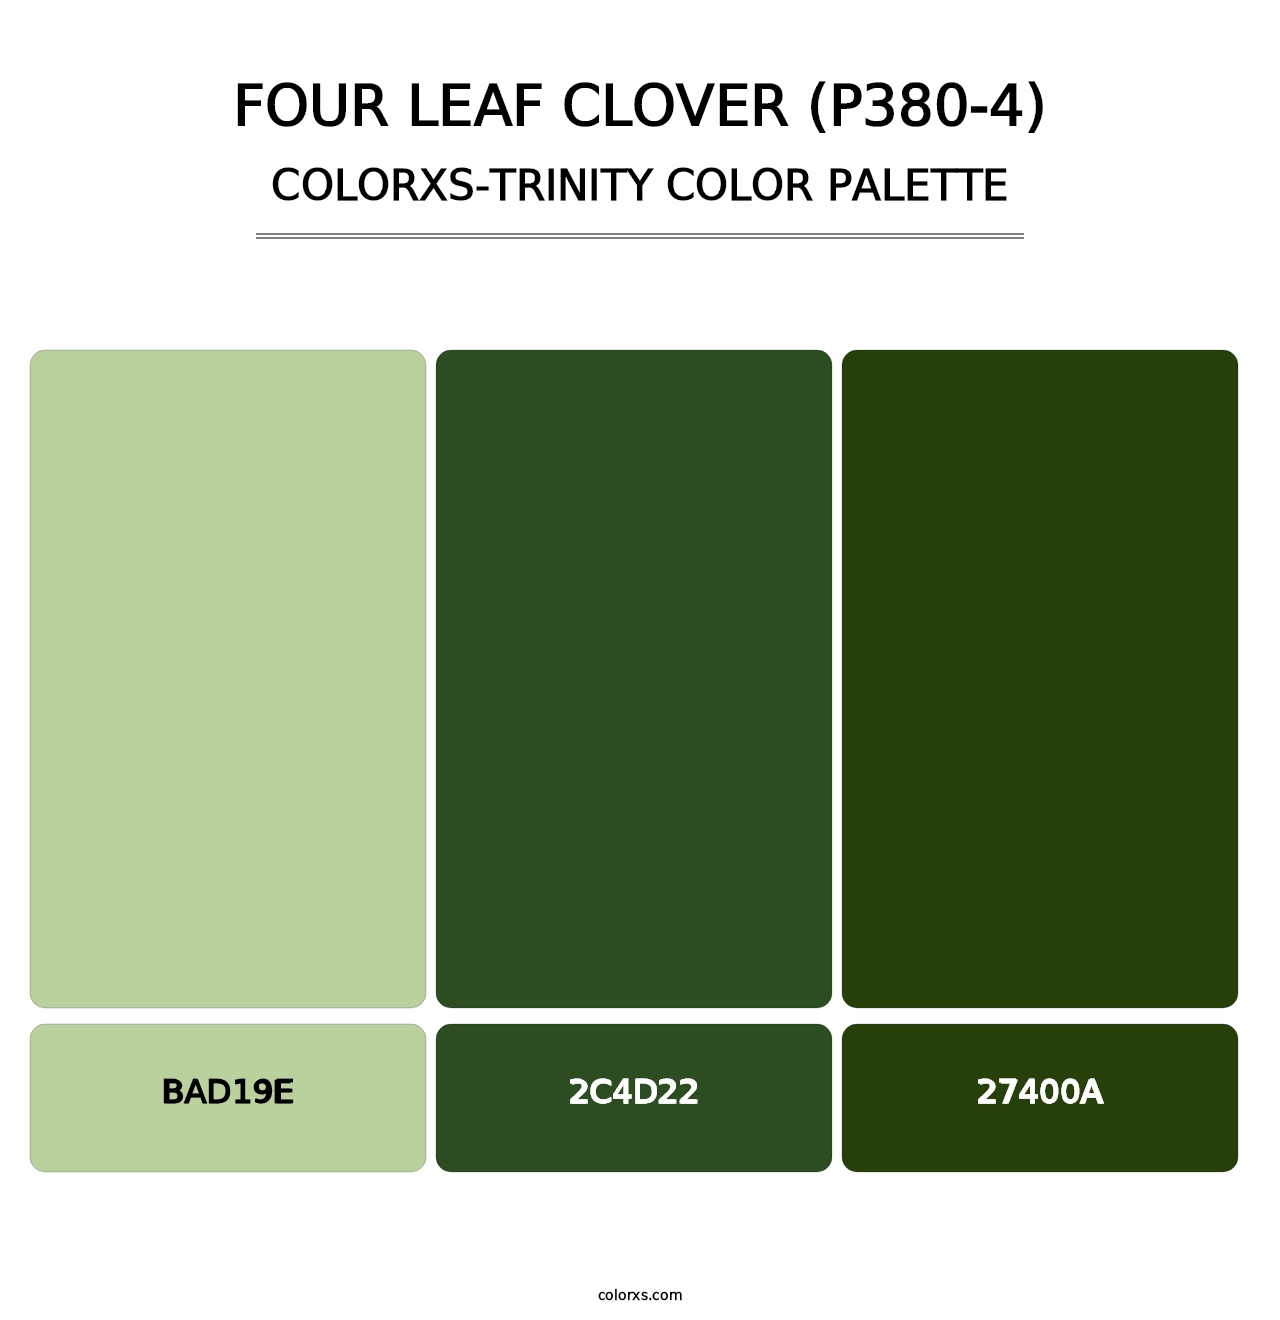 Four Leaf Clover (P380-4) - Colorxs Trinity Palette